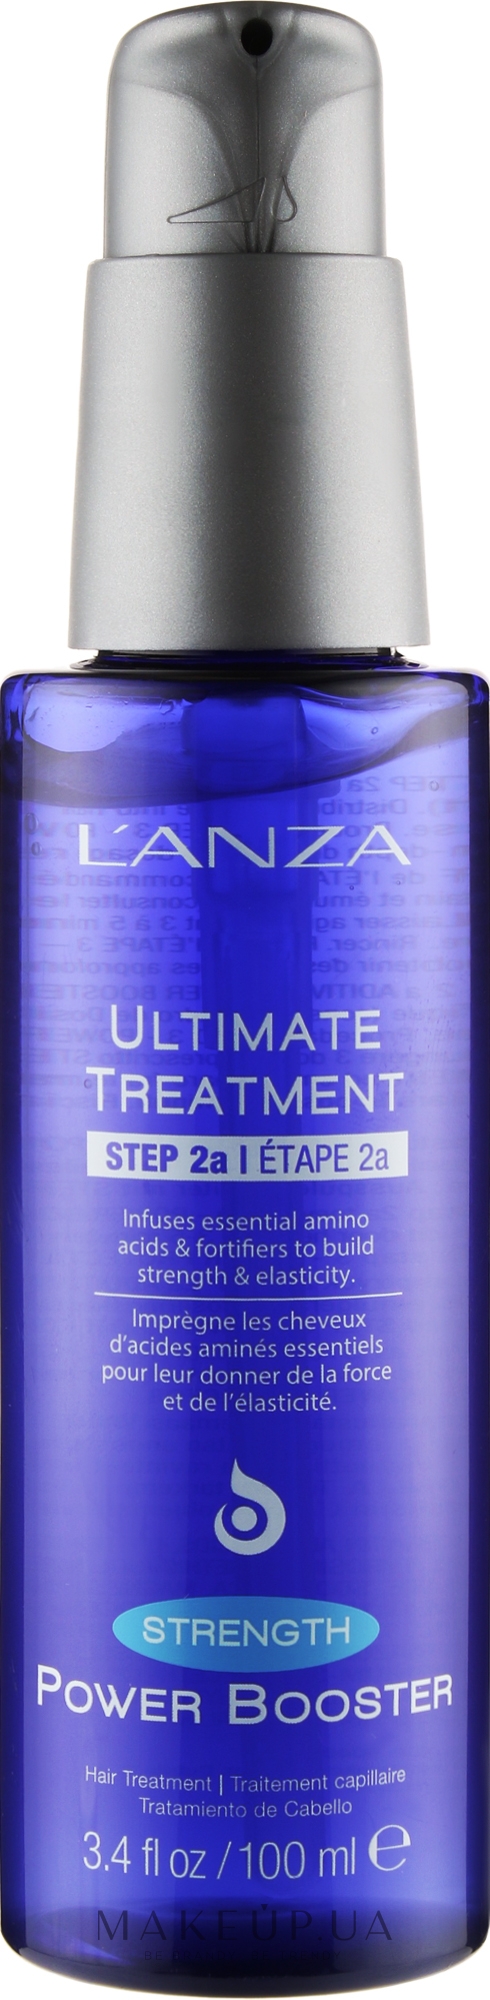 Активный бустер для волос - L'Anza Ultimate Treatment Power Boost Strength — фото 100ml